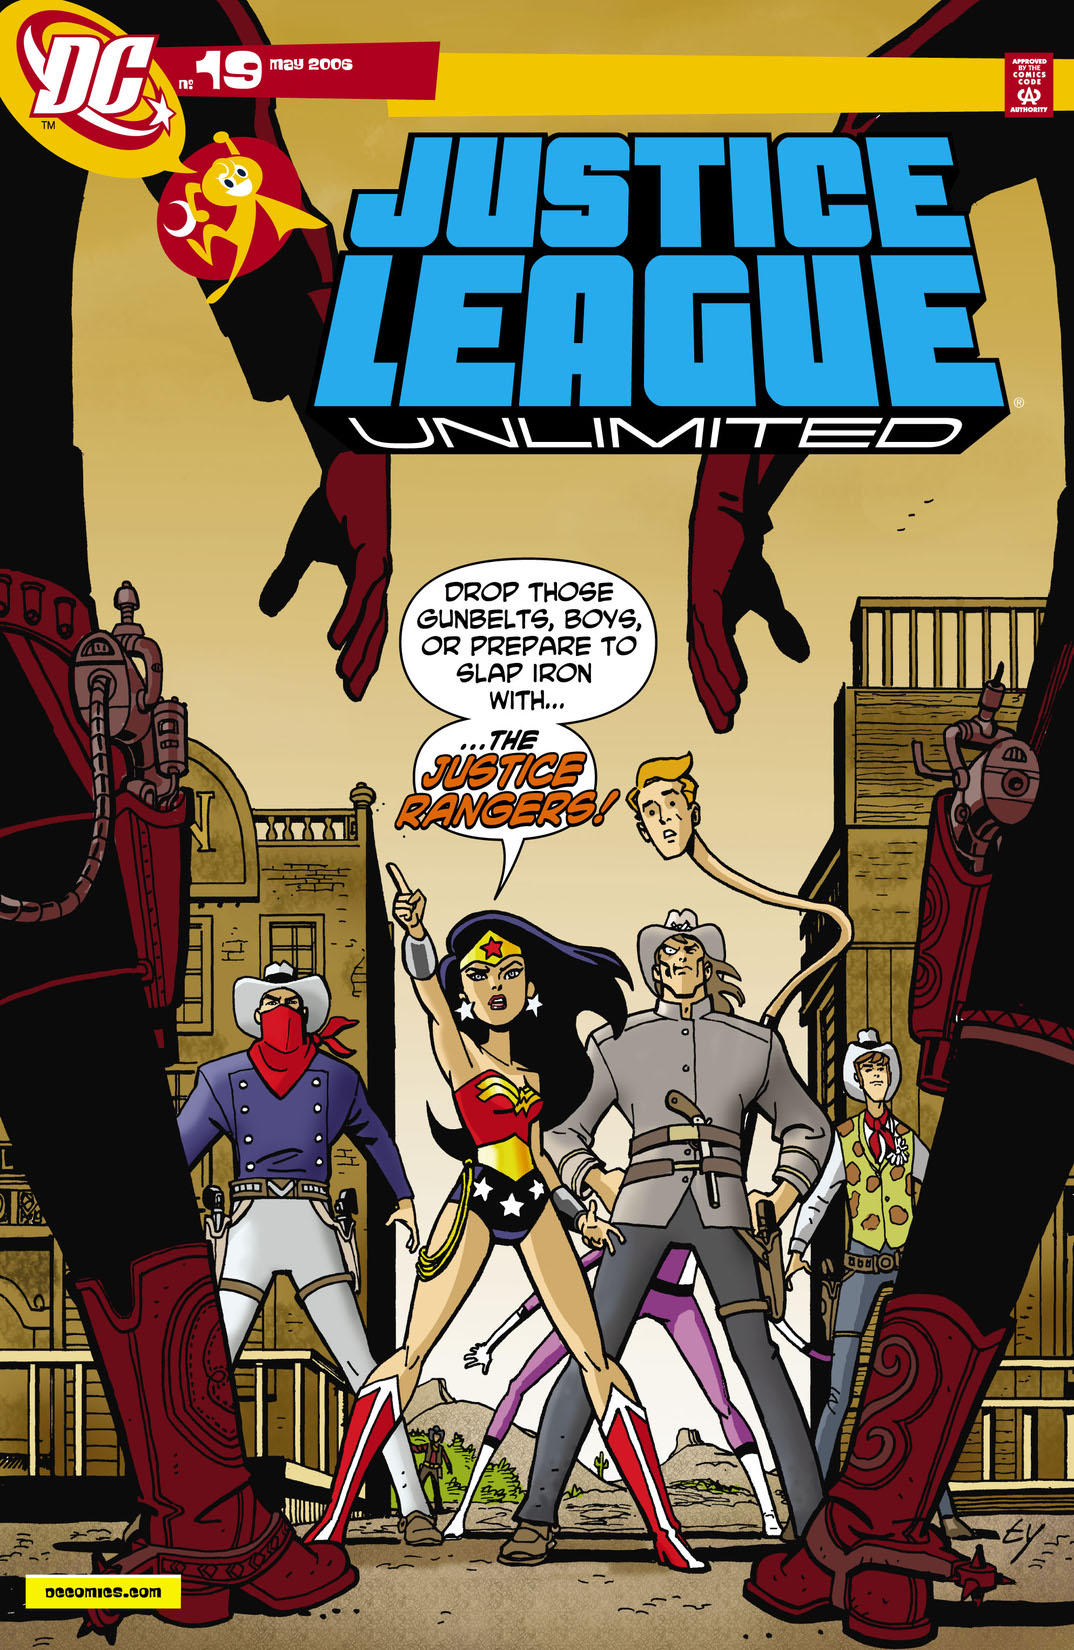 Justice League Unlimited #19 preview images